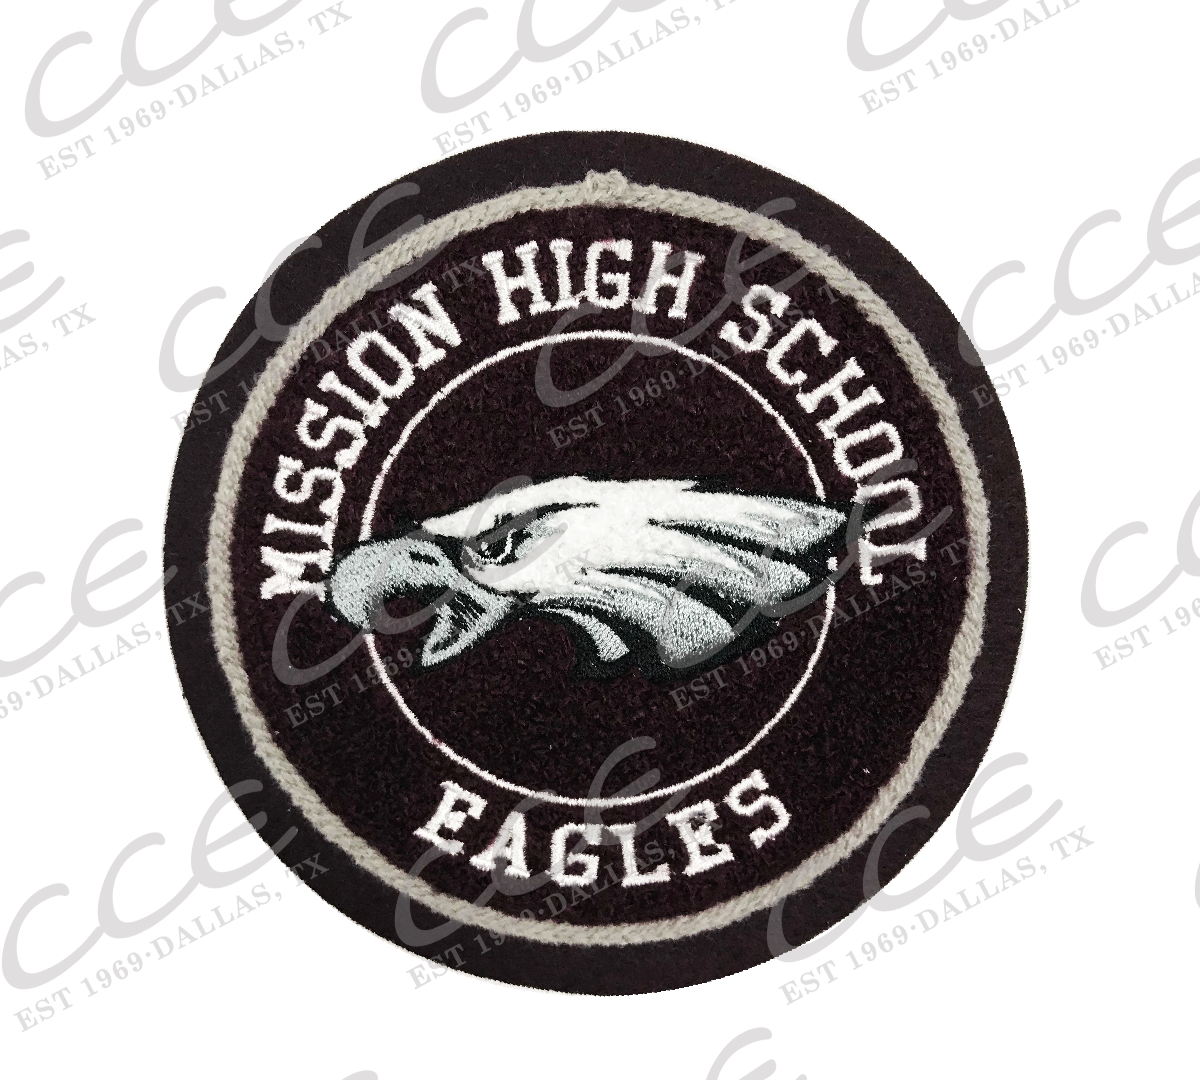 Mission HS Eagle Mascot